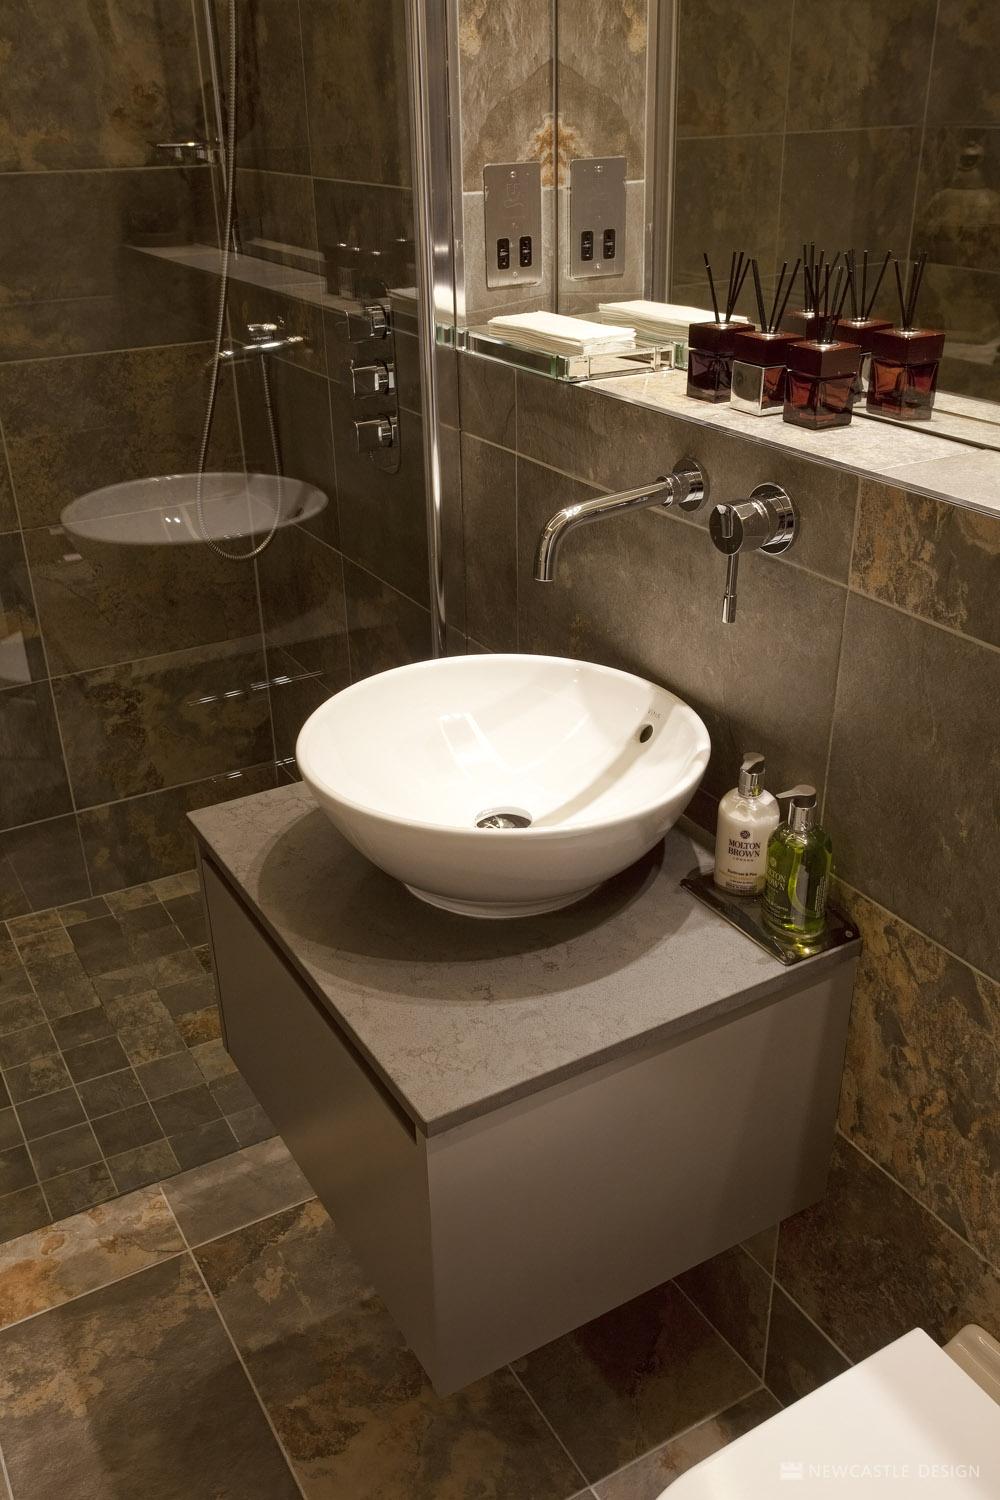 Bathroom Vanity Units in Ireland from Newcastle Design